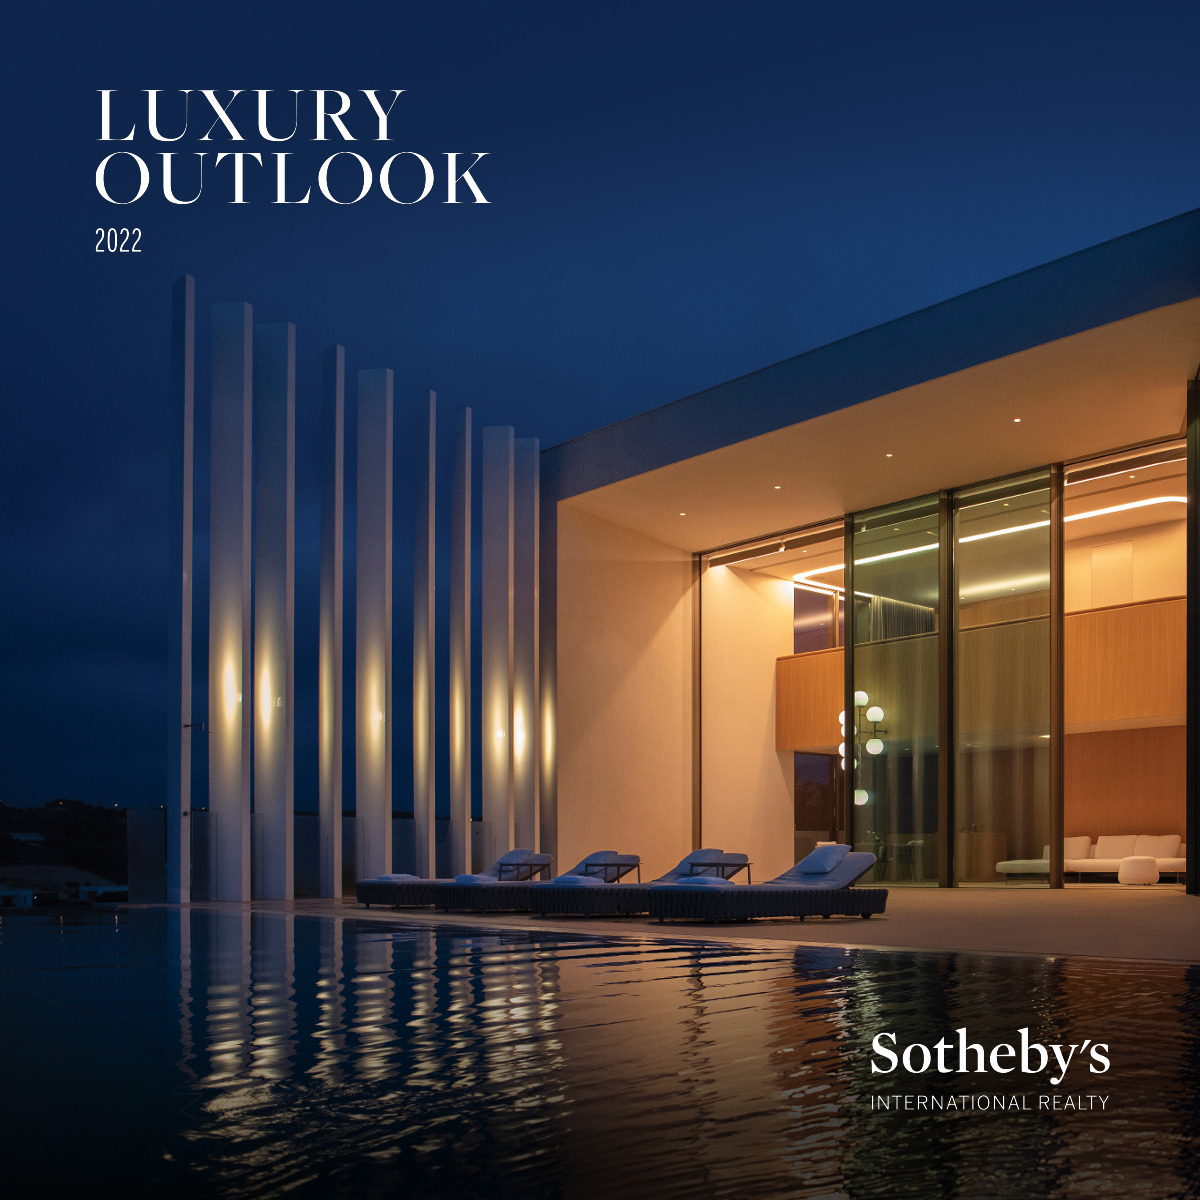 Sotheby's Luxury Outlook 2022